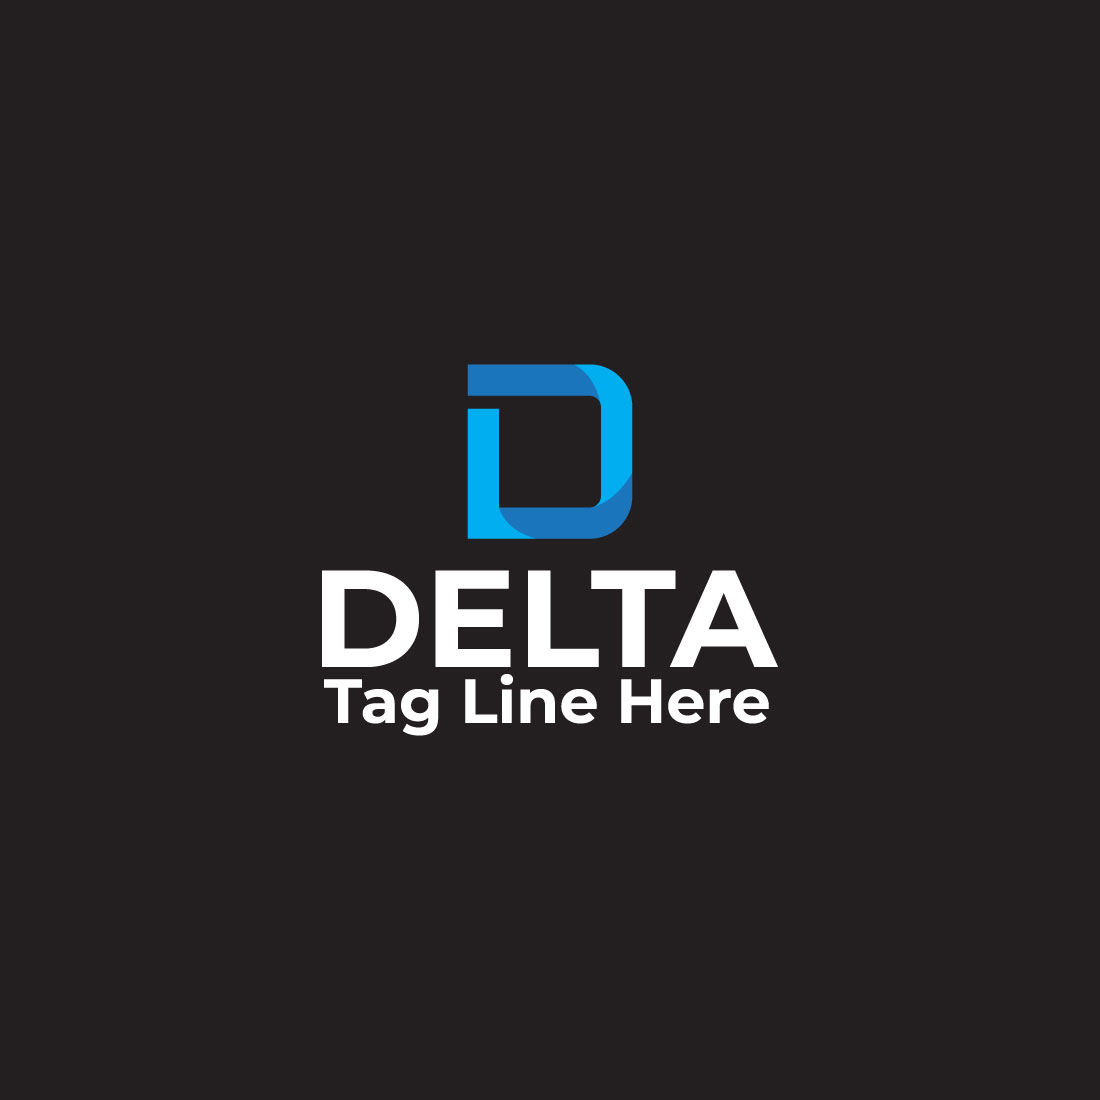 D Letter Logo Design Template cover image.